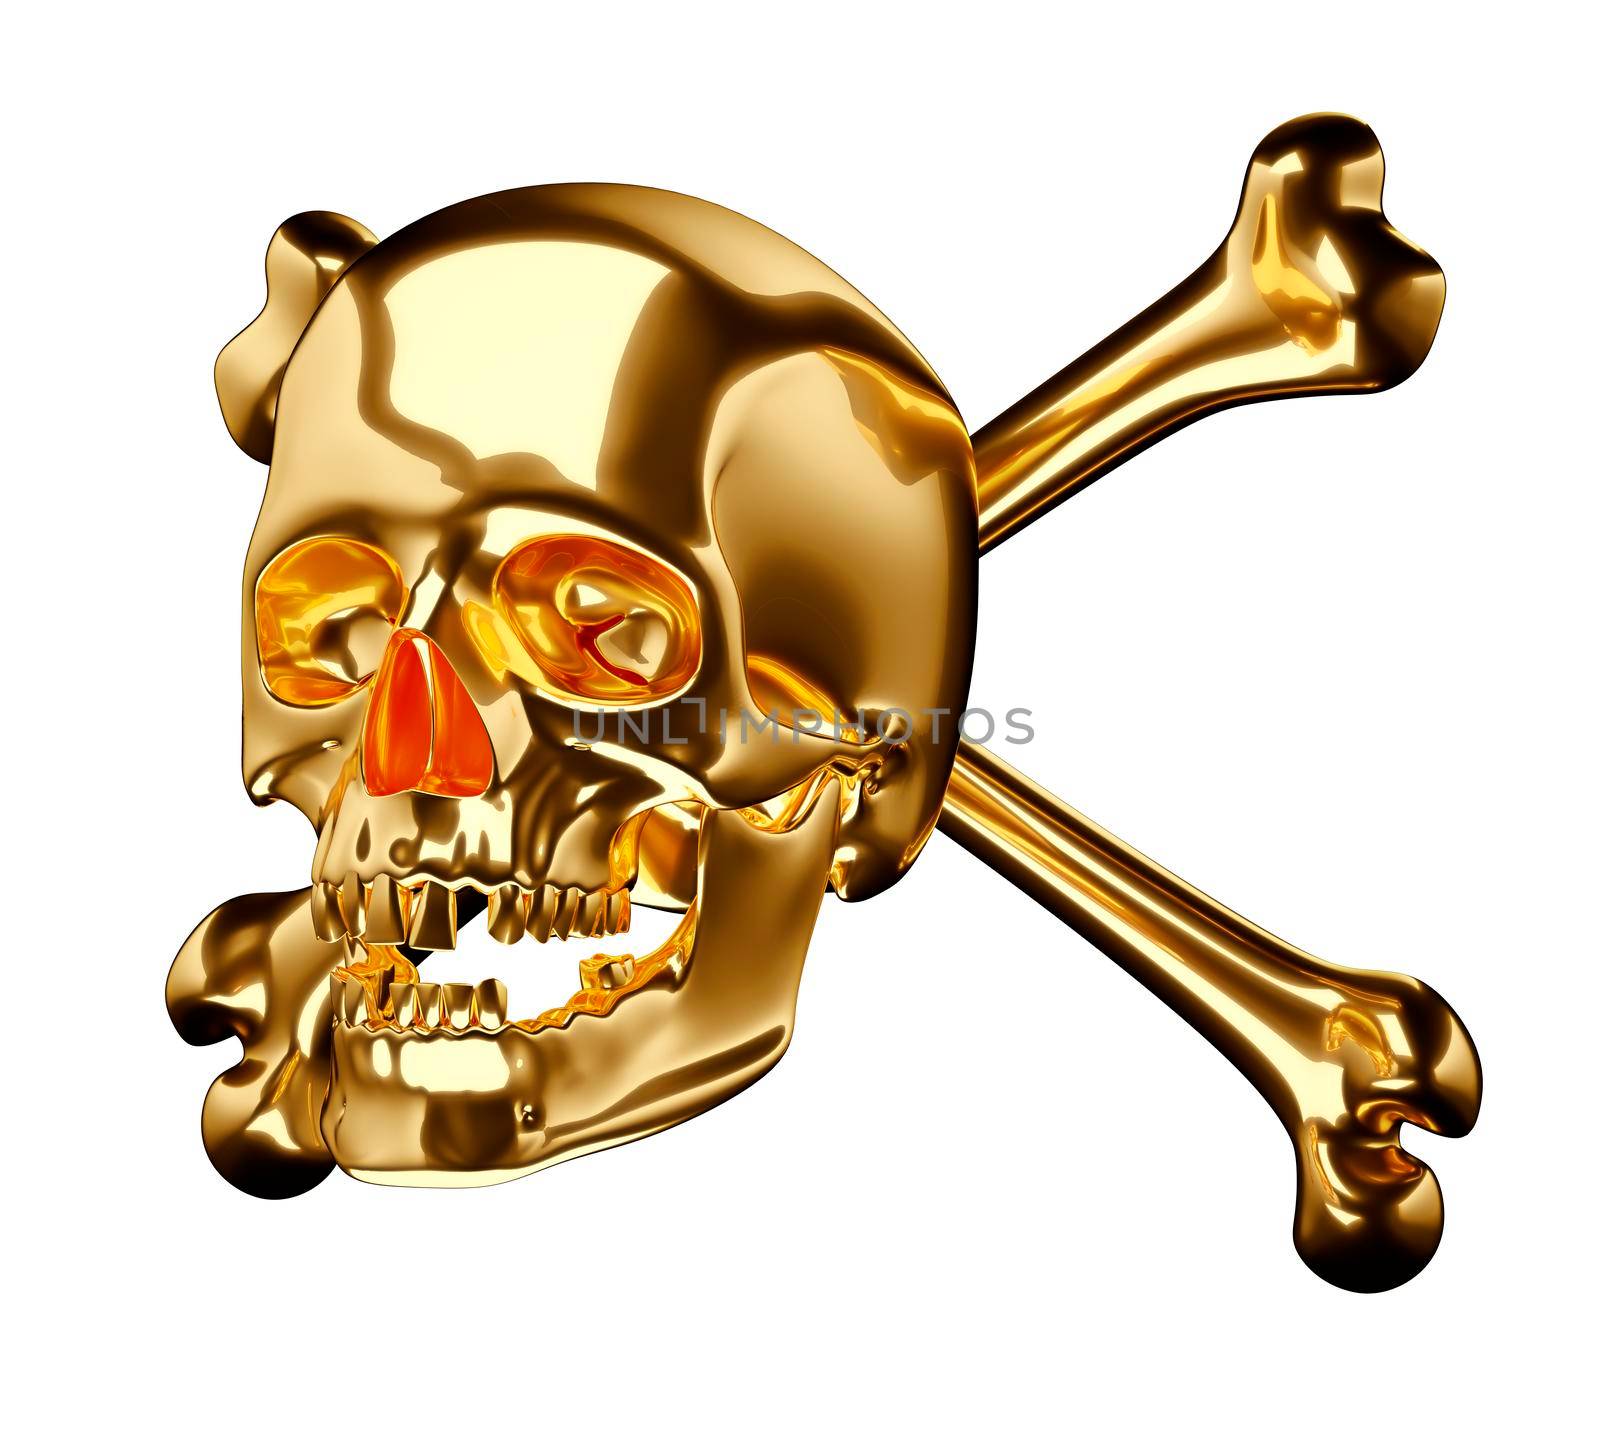 Golden Skull with cross bones or totenkopf isolated by Arsgera